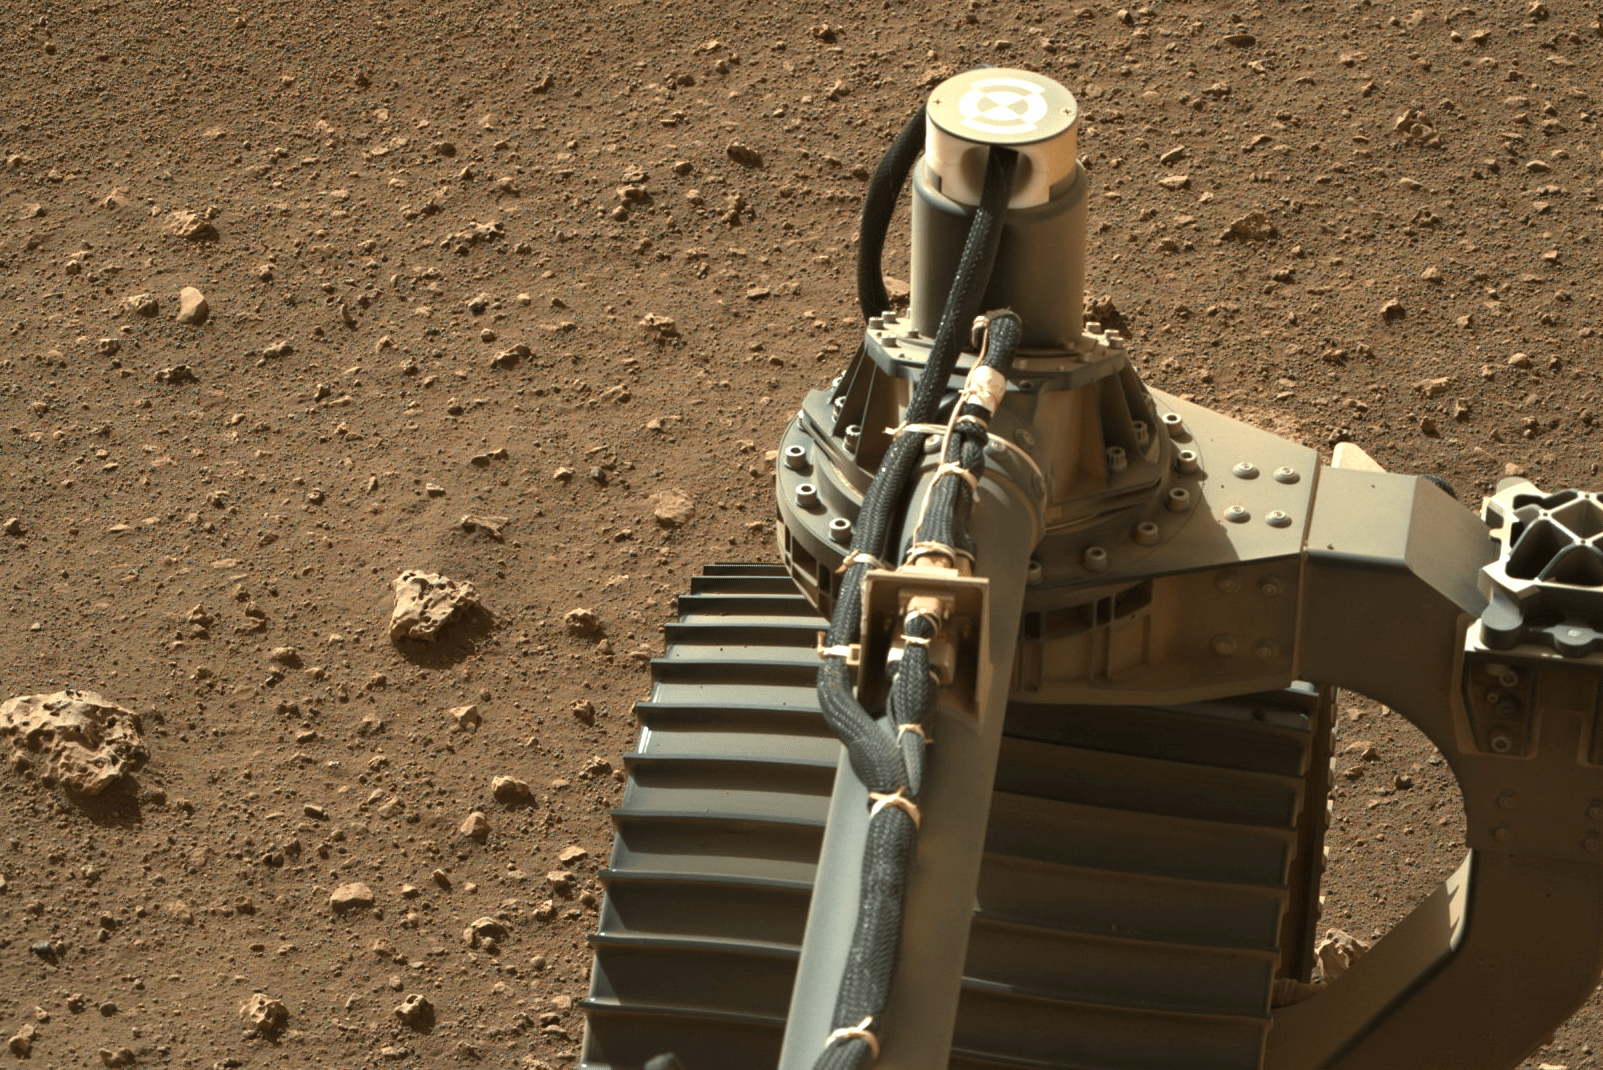 The rover's front left wheel and some rocks.  (Image: NASA/JPL-Caltech/ASU)